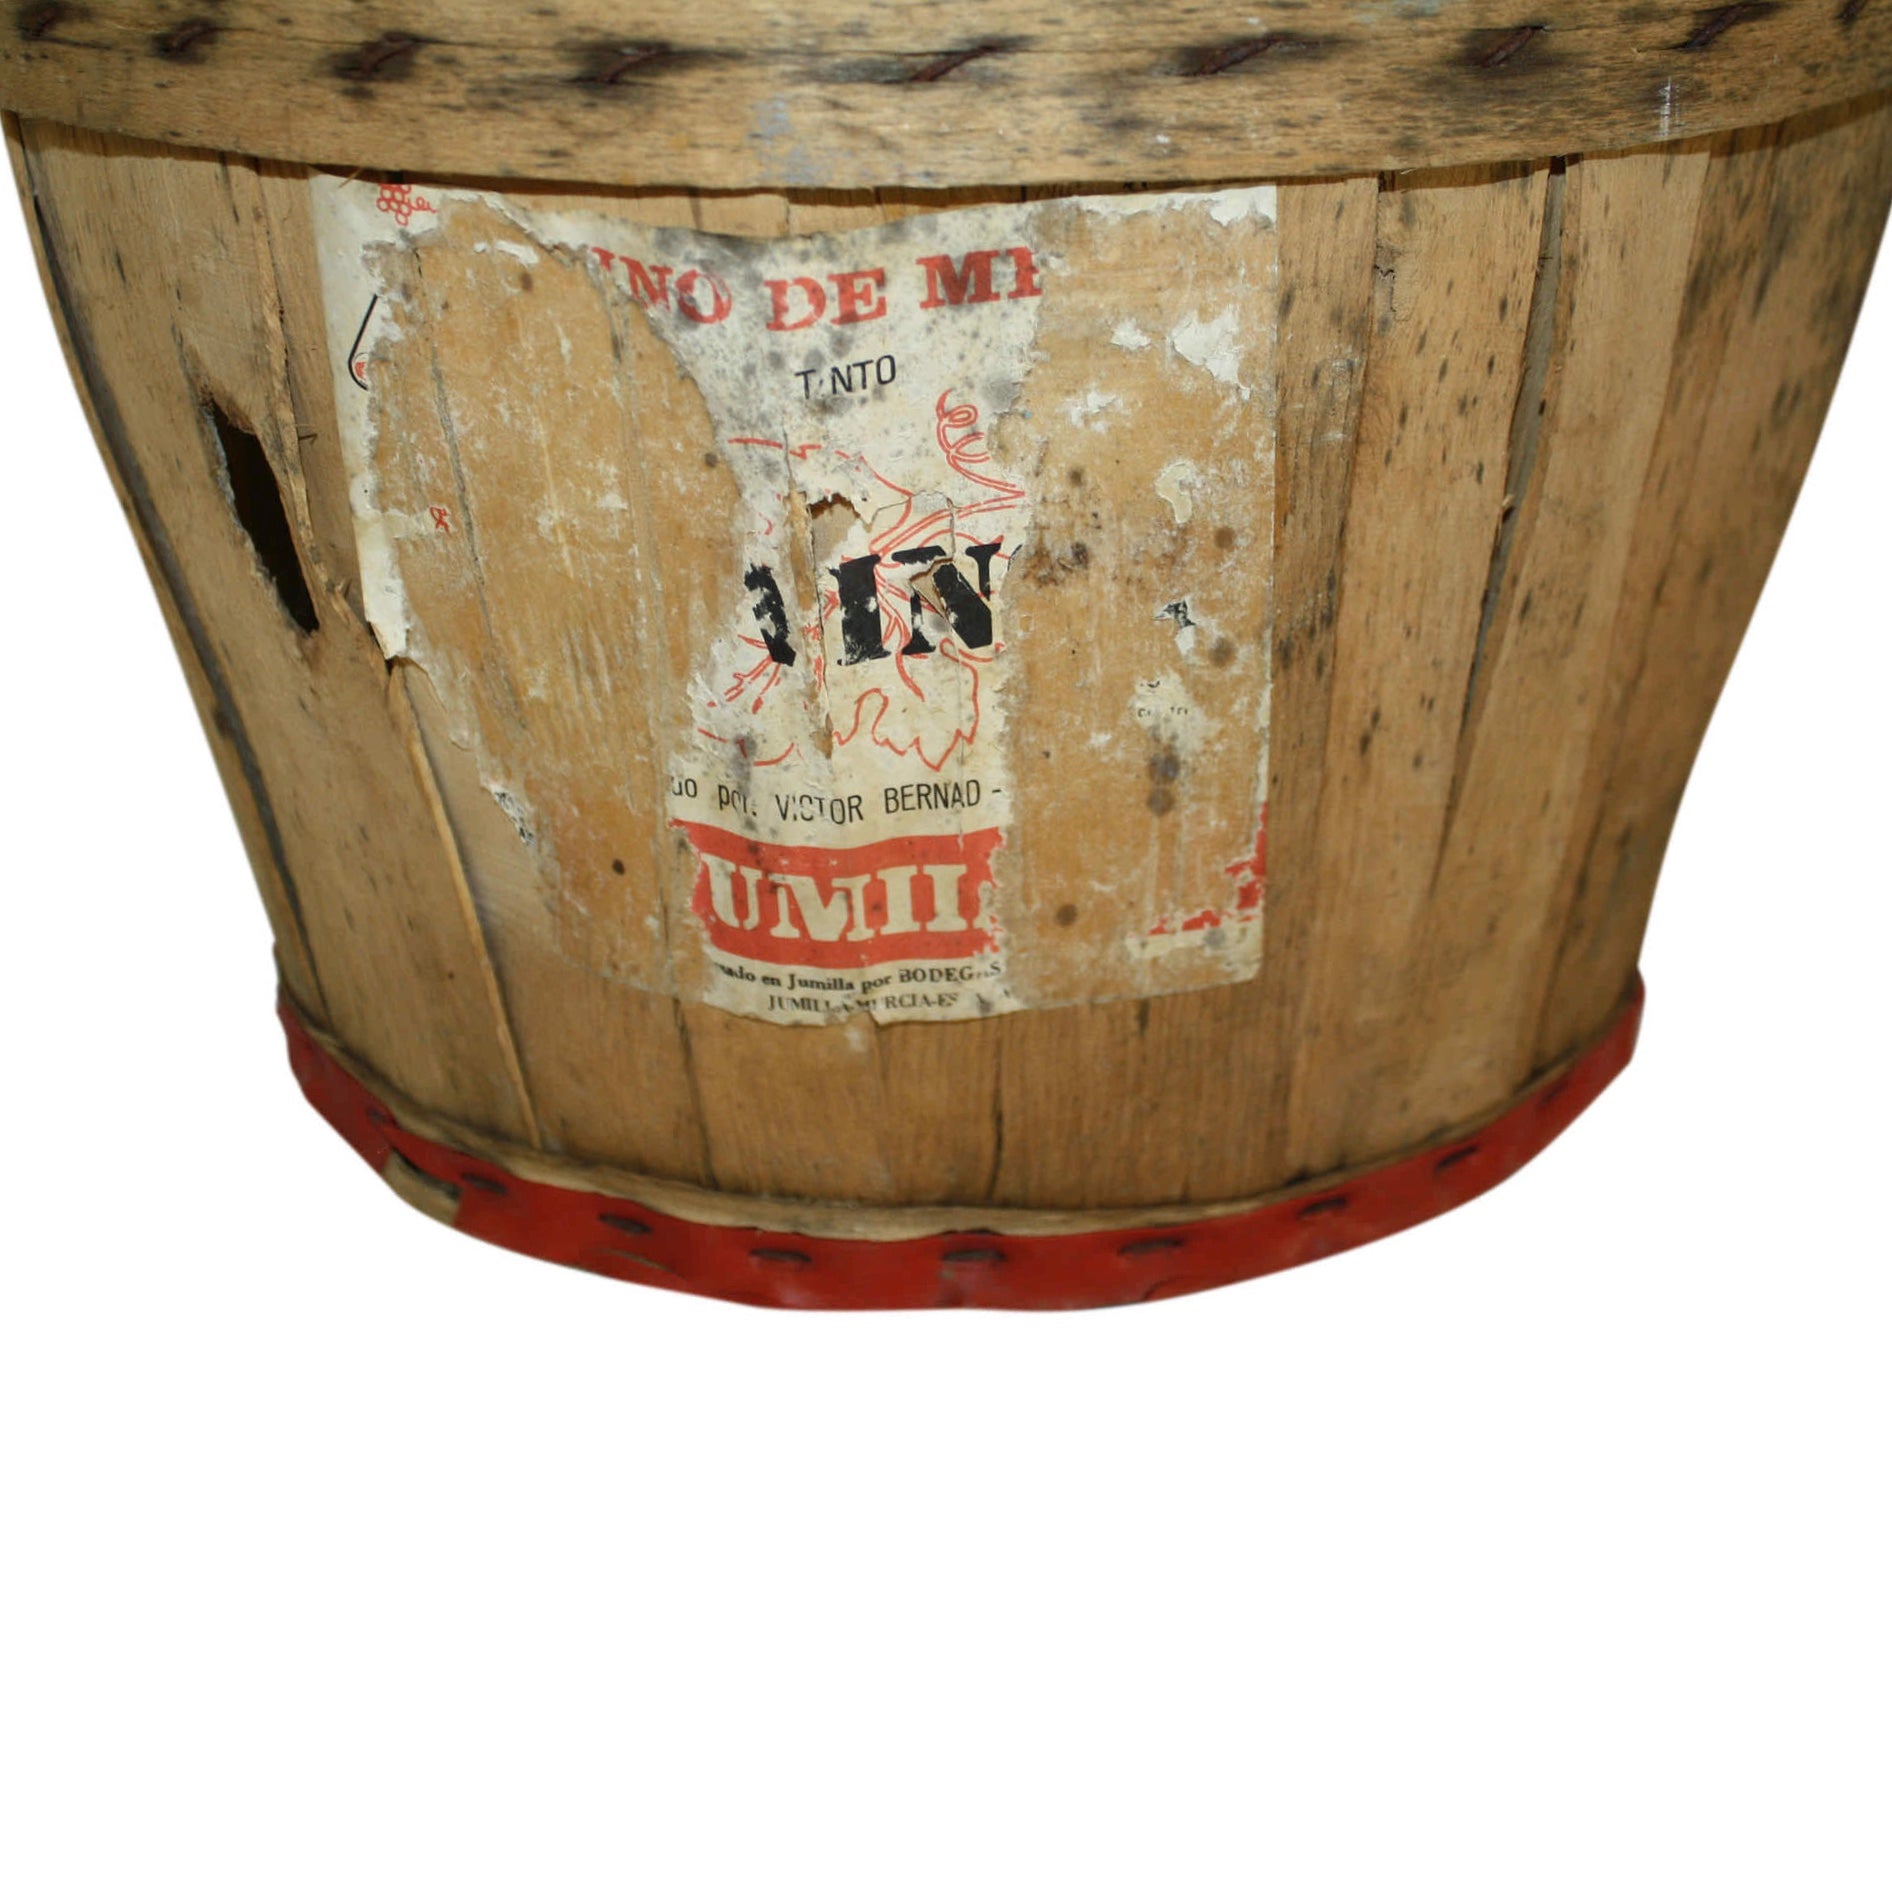 Spanish Wine Bottle in Basket